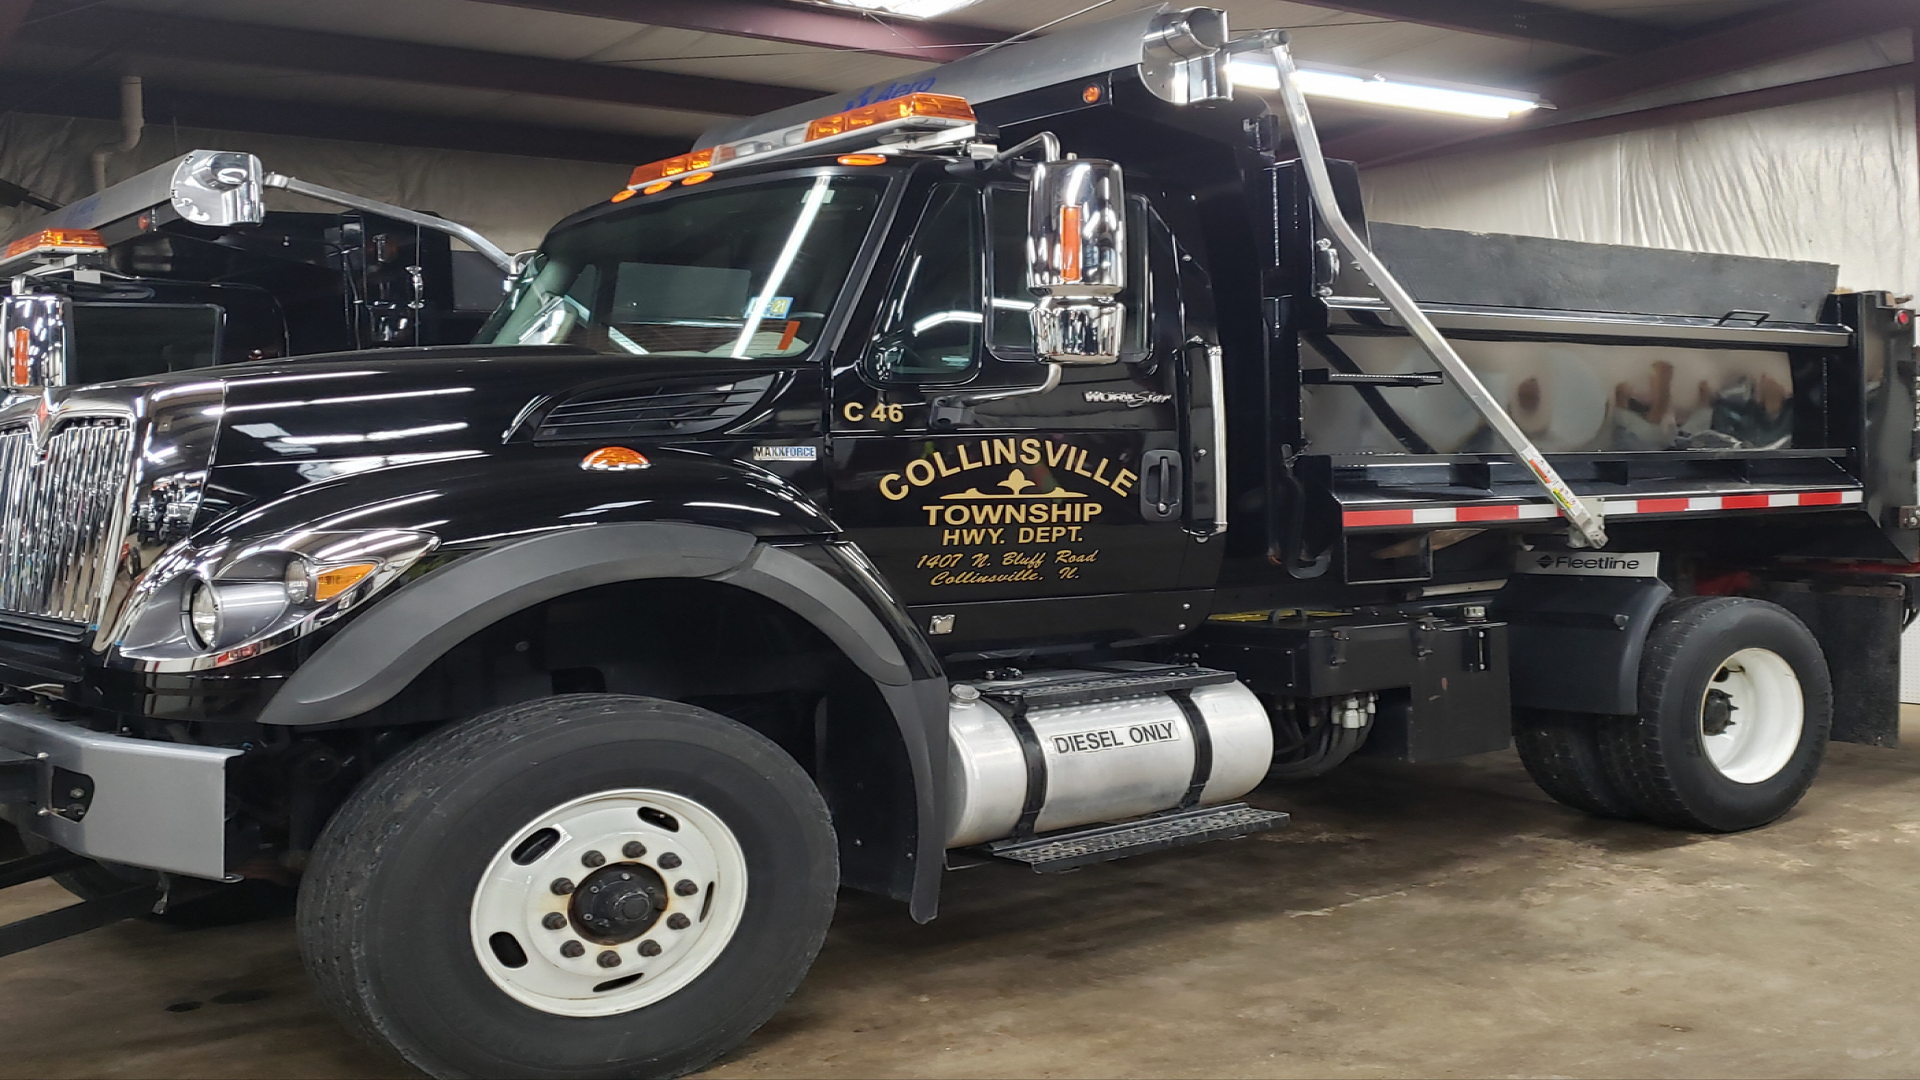 Picture of Higway Department dump truck